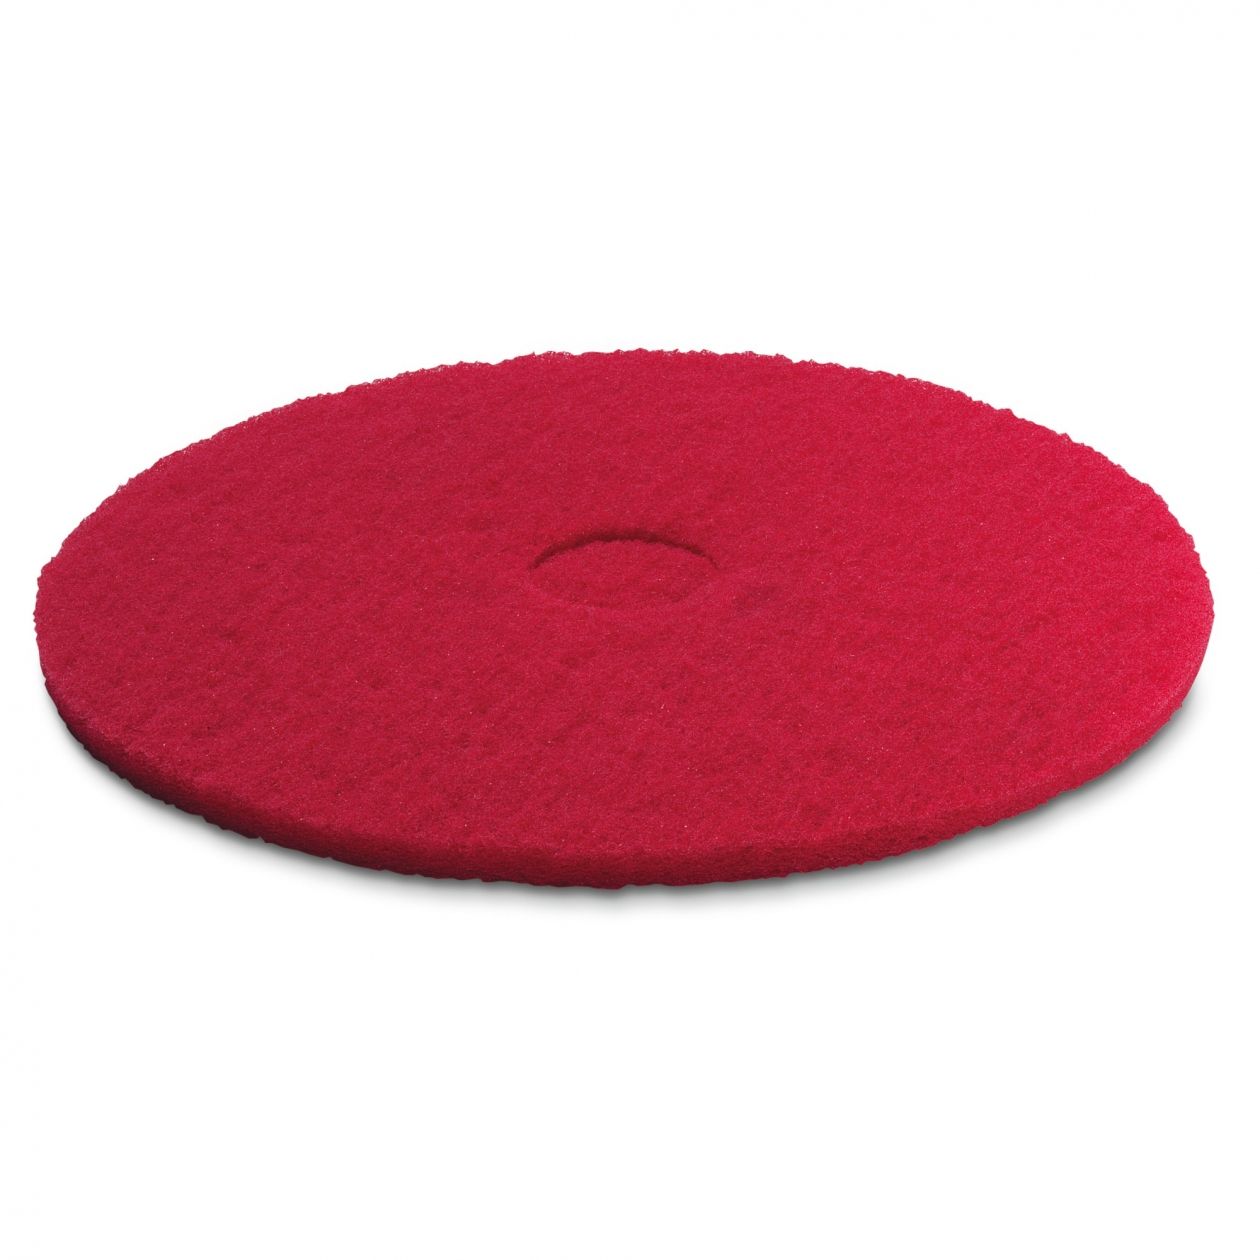 Пад, средне мягкий, красный, Karcher 330 mm